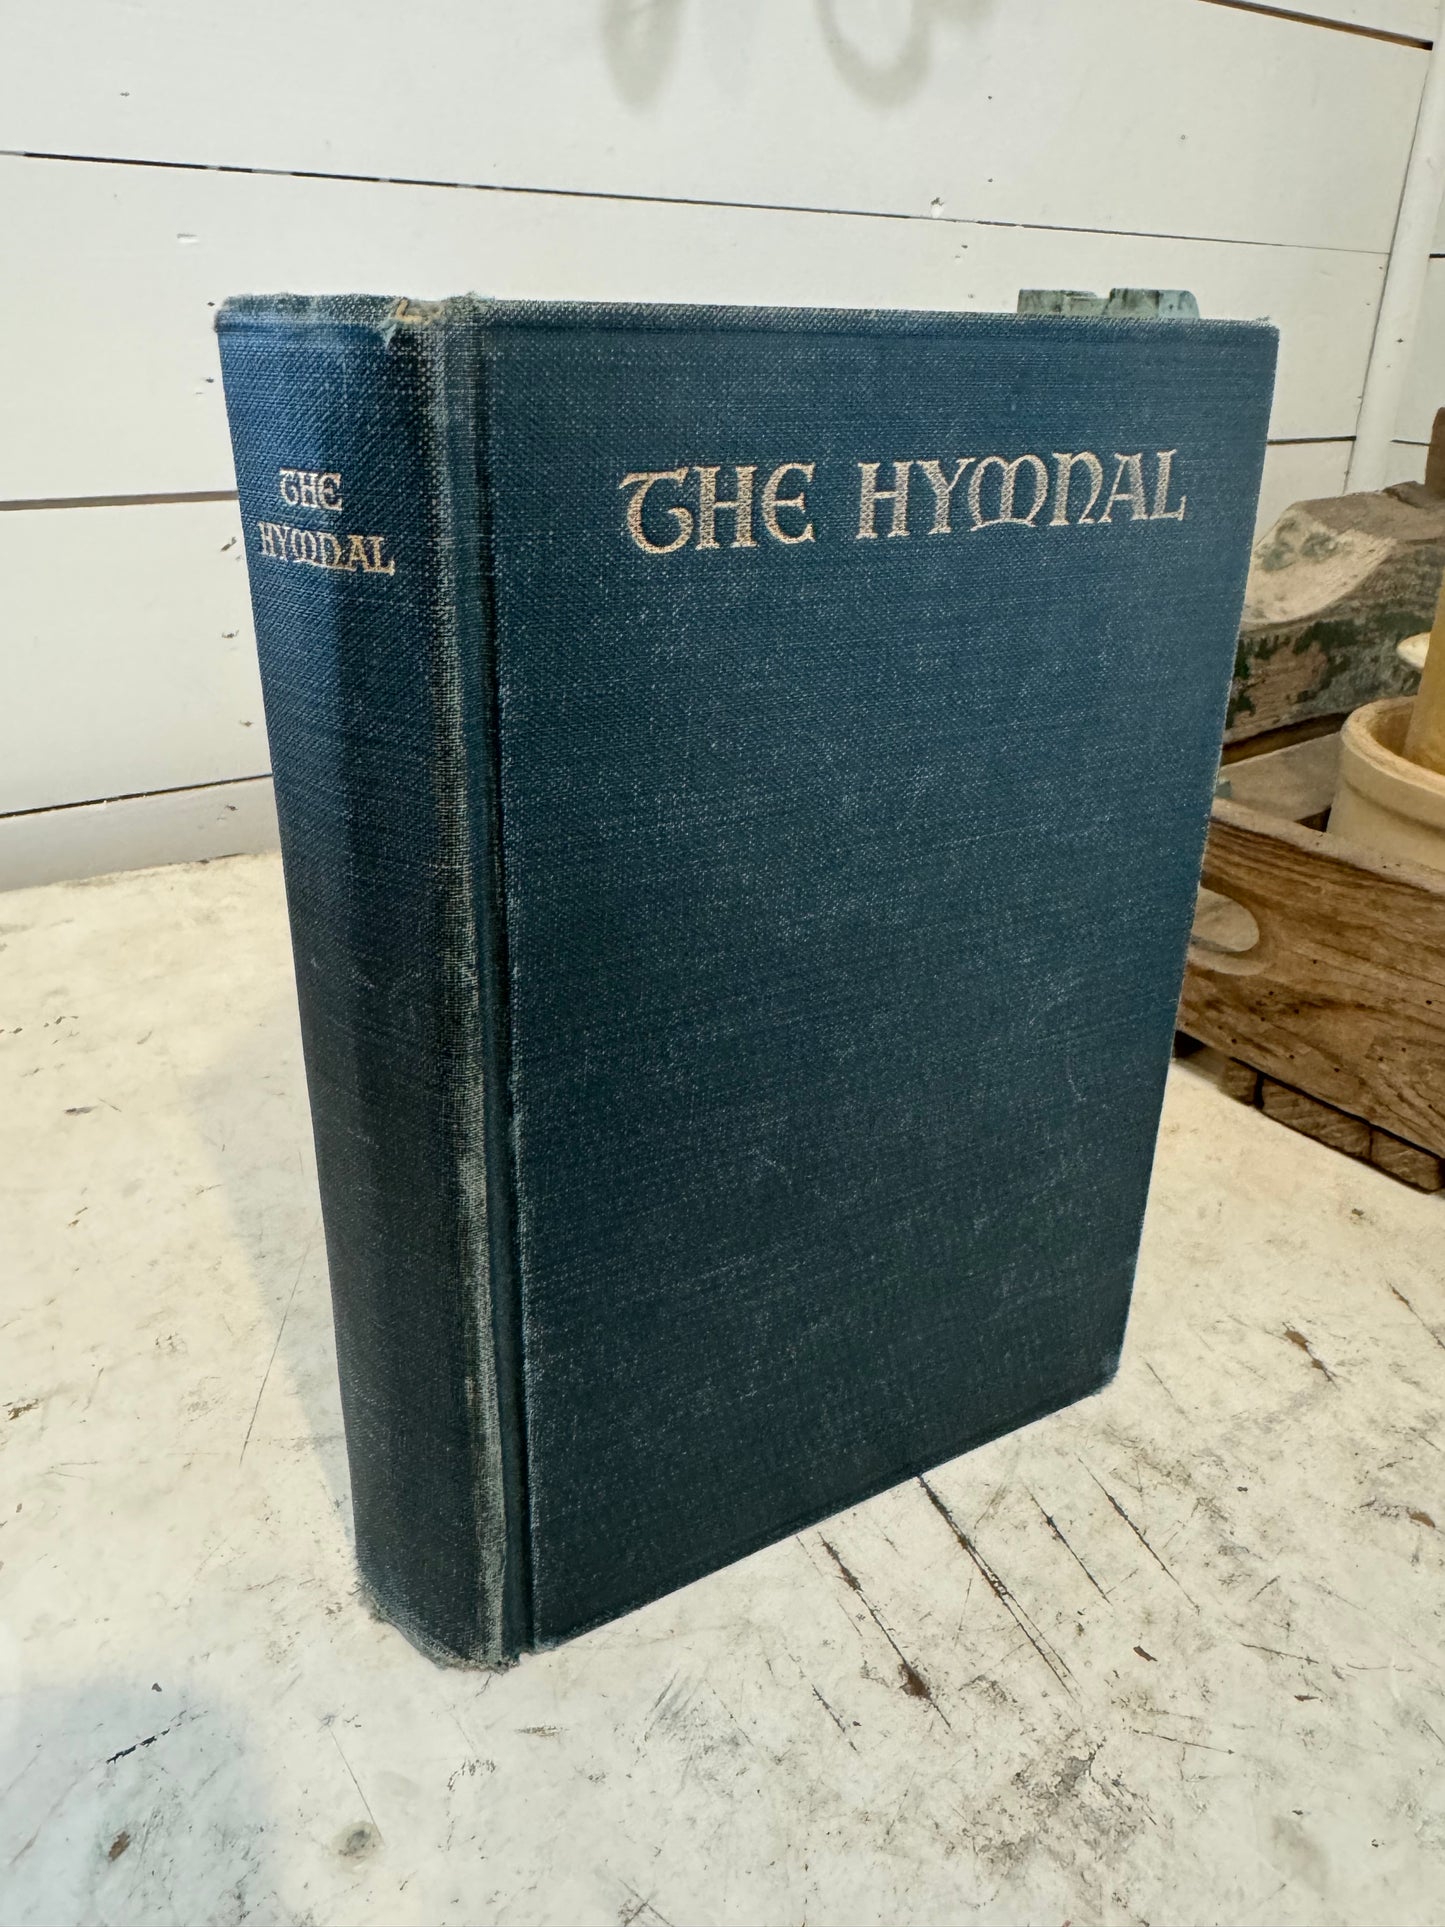 The Hymnal (Presbyterian) Hardcover 1933